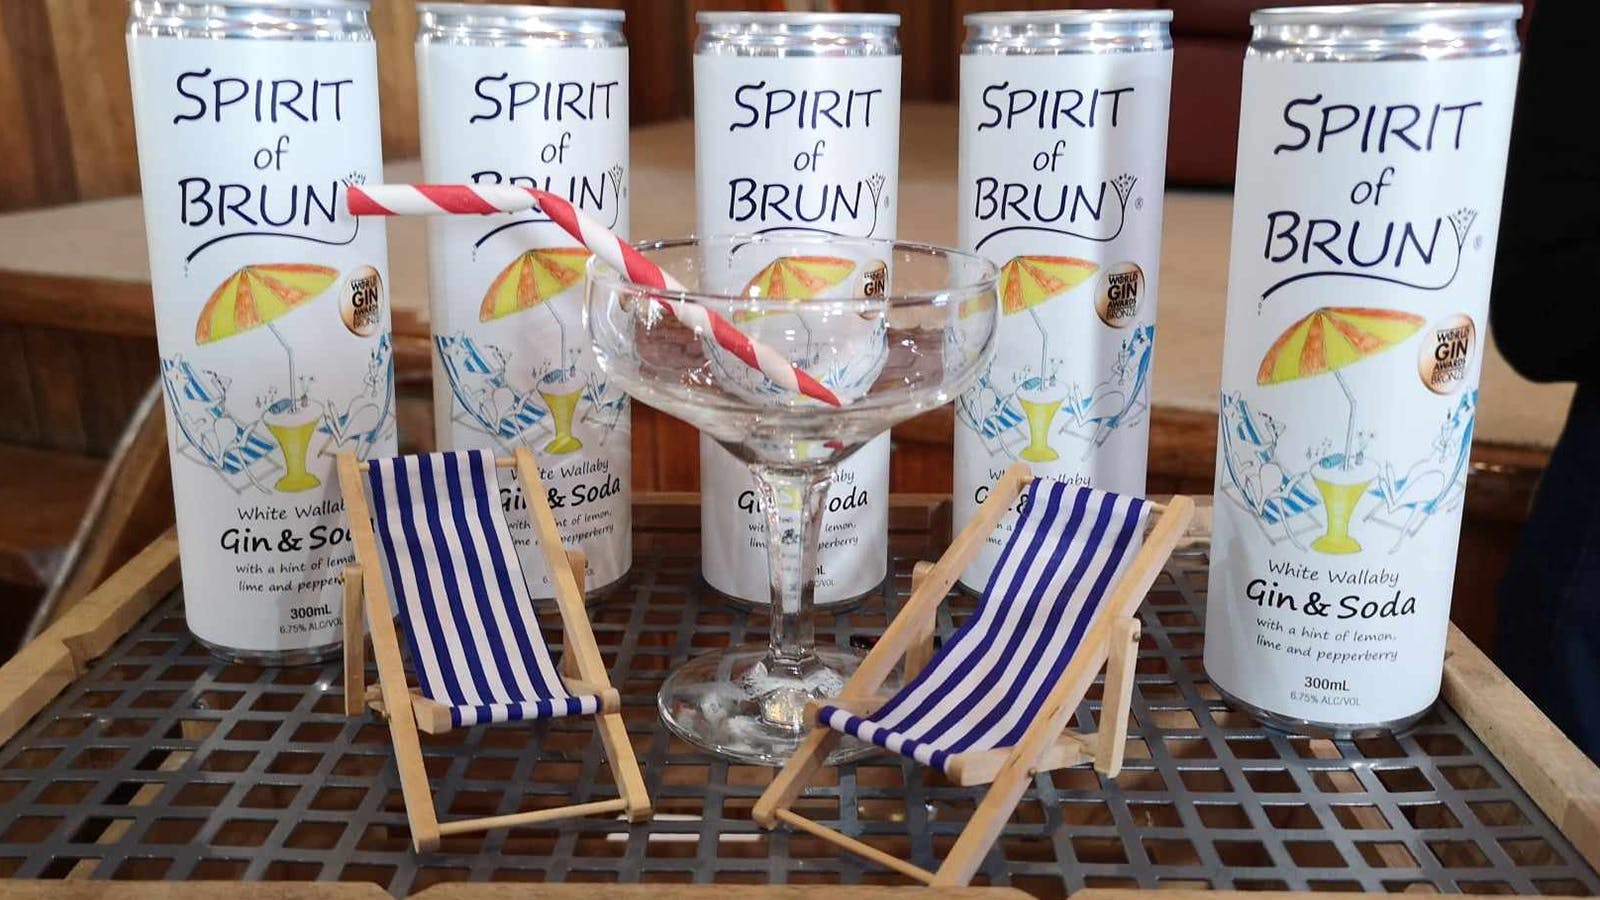 Spirit of Bruny has gin samplings of their award-winning White Wallaby Gin, plus sell gin & soda